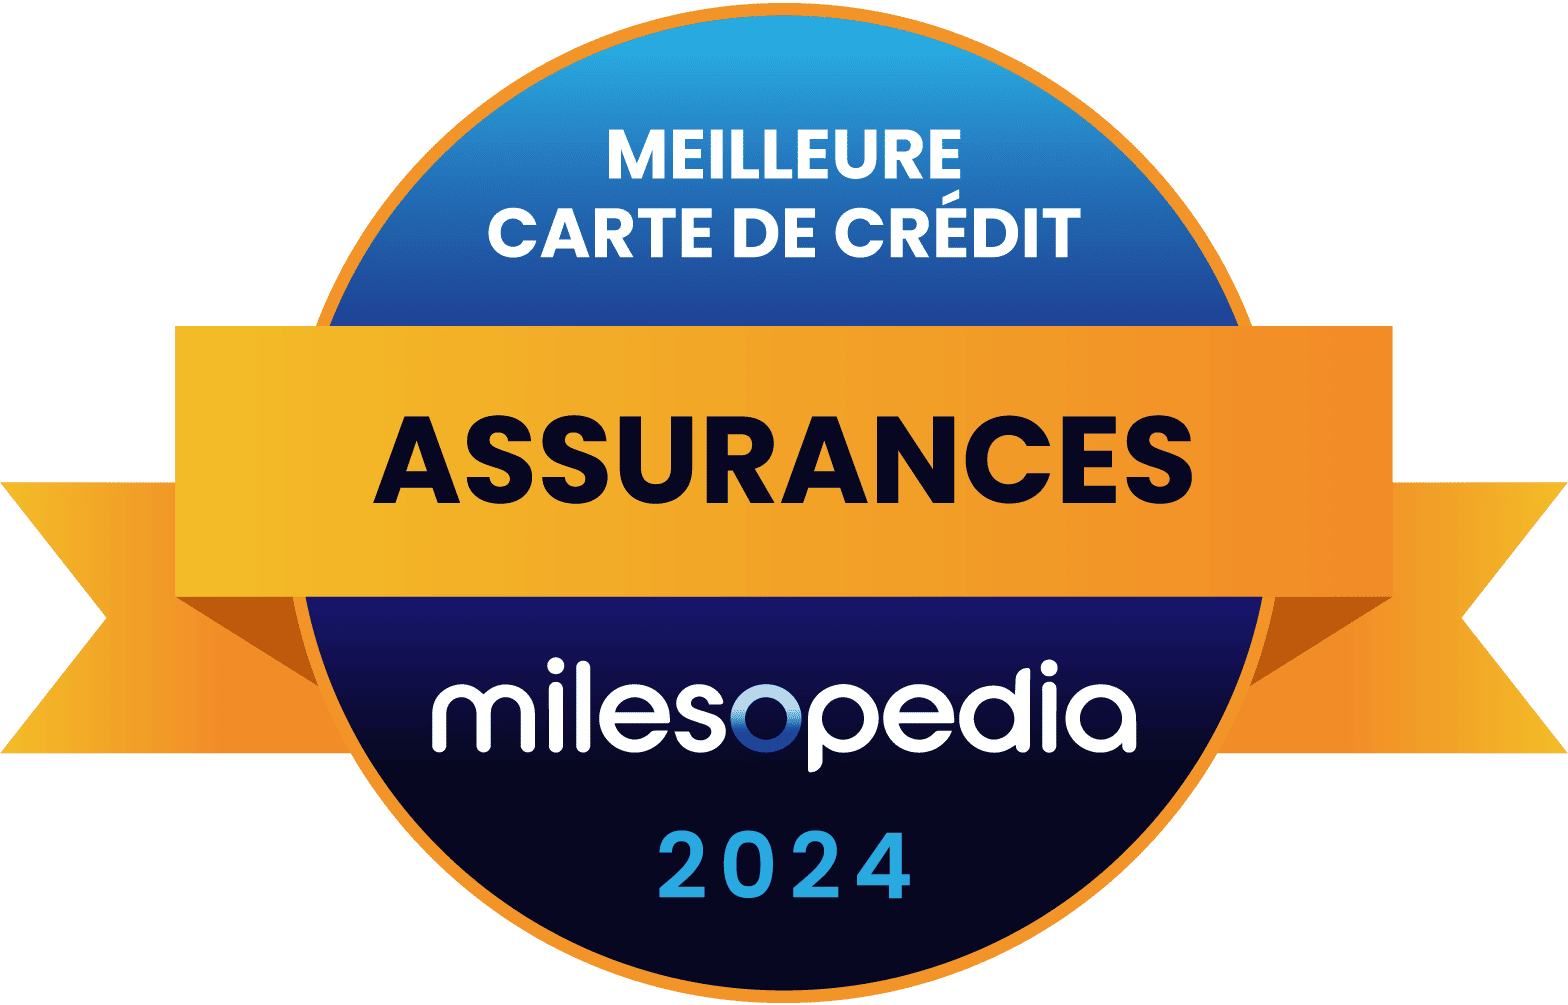 Assurances MeilleureCarteDeCredit Milesopedia 2024